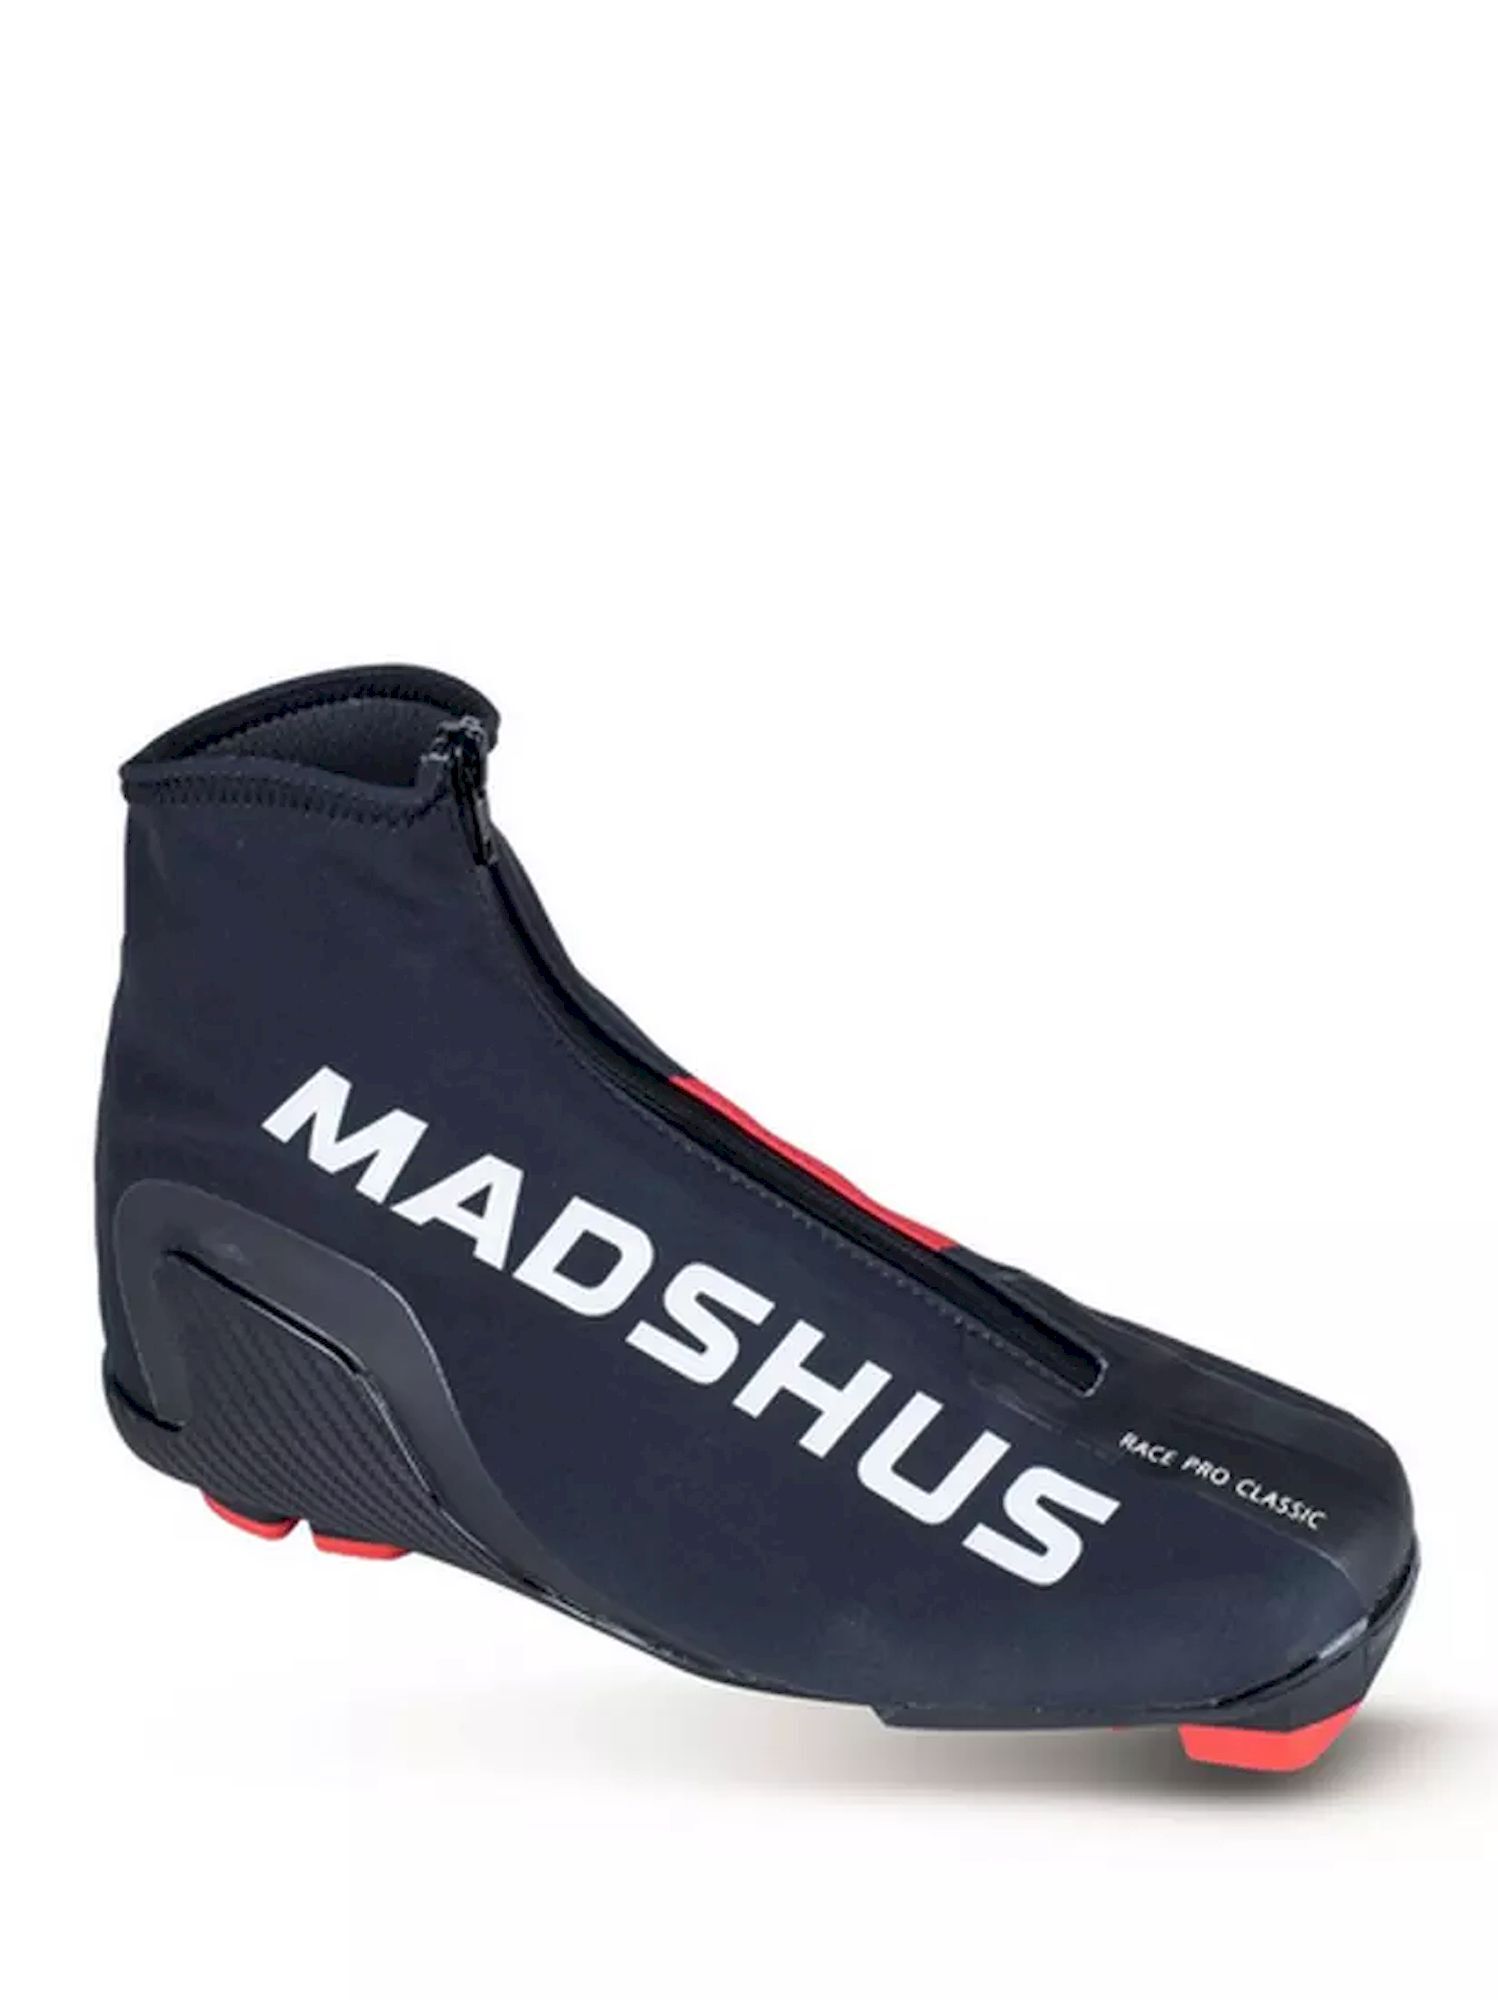 Madshus Race Pro Classic - Buty do nart biegowych | Hardloop